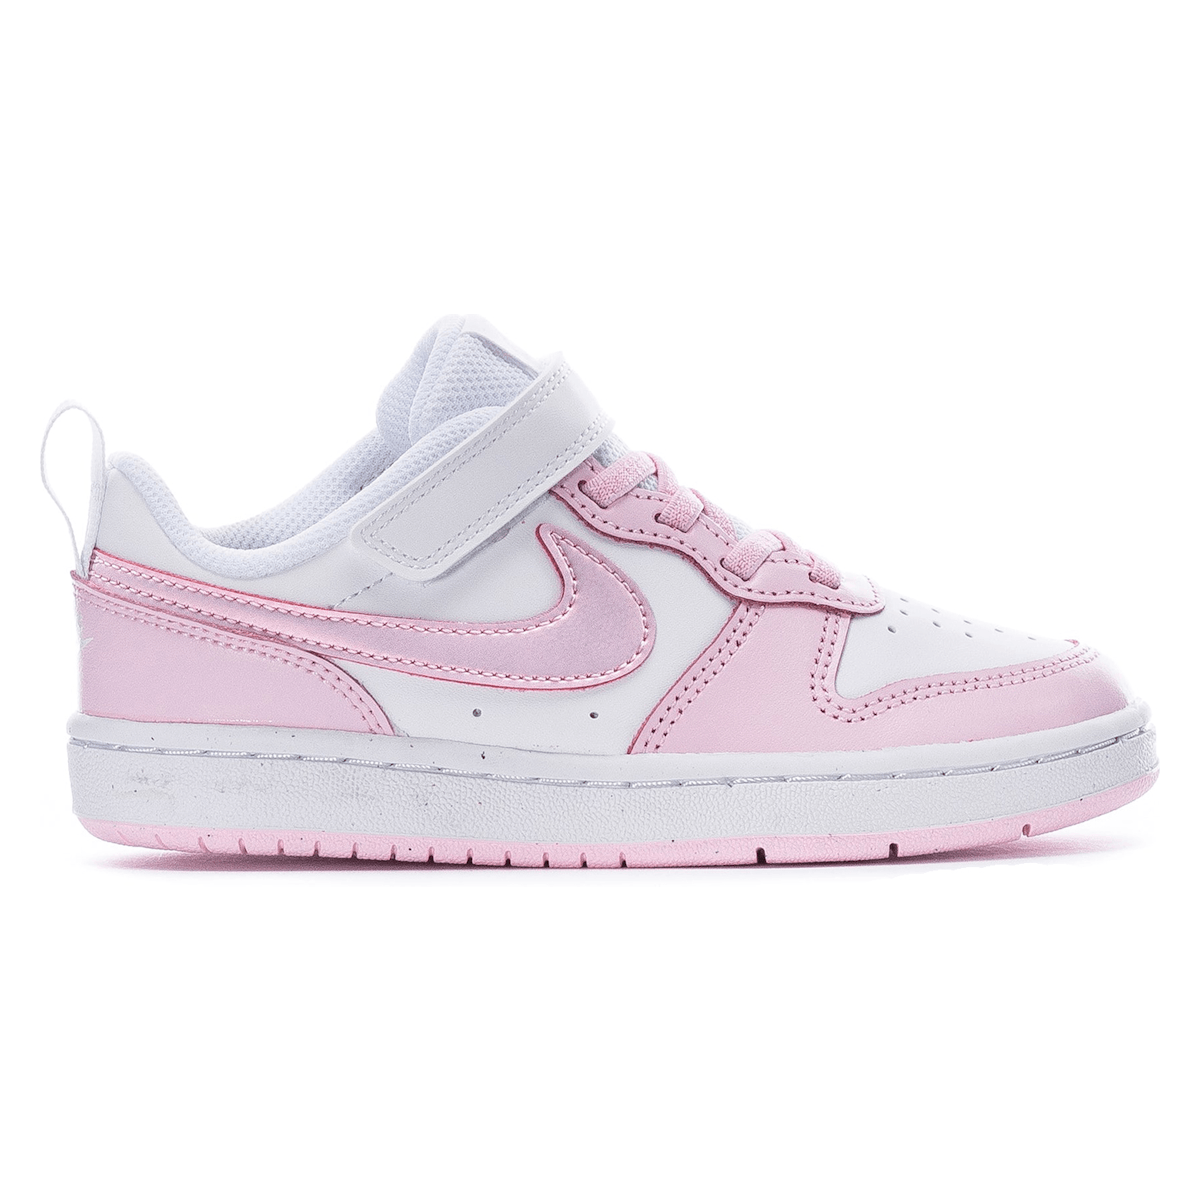 Nike Court Borough Low 2 White Pink Foam (PS)